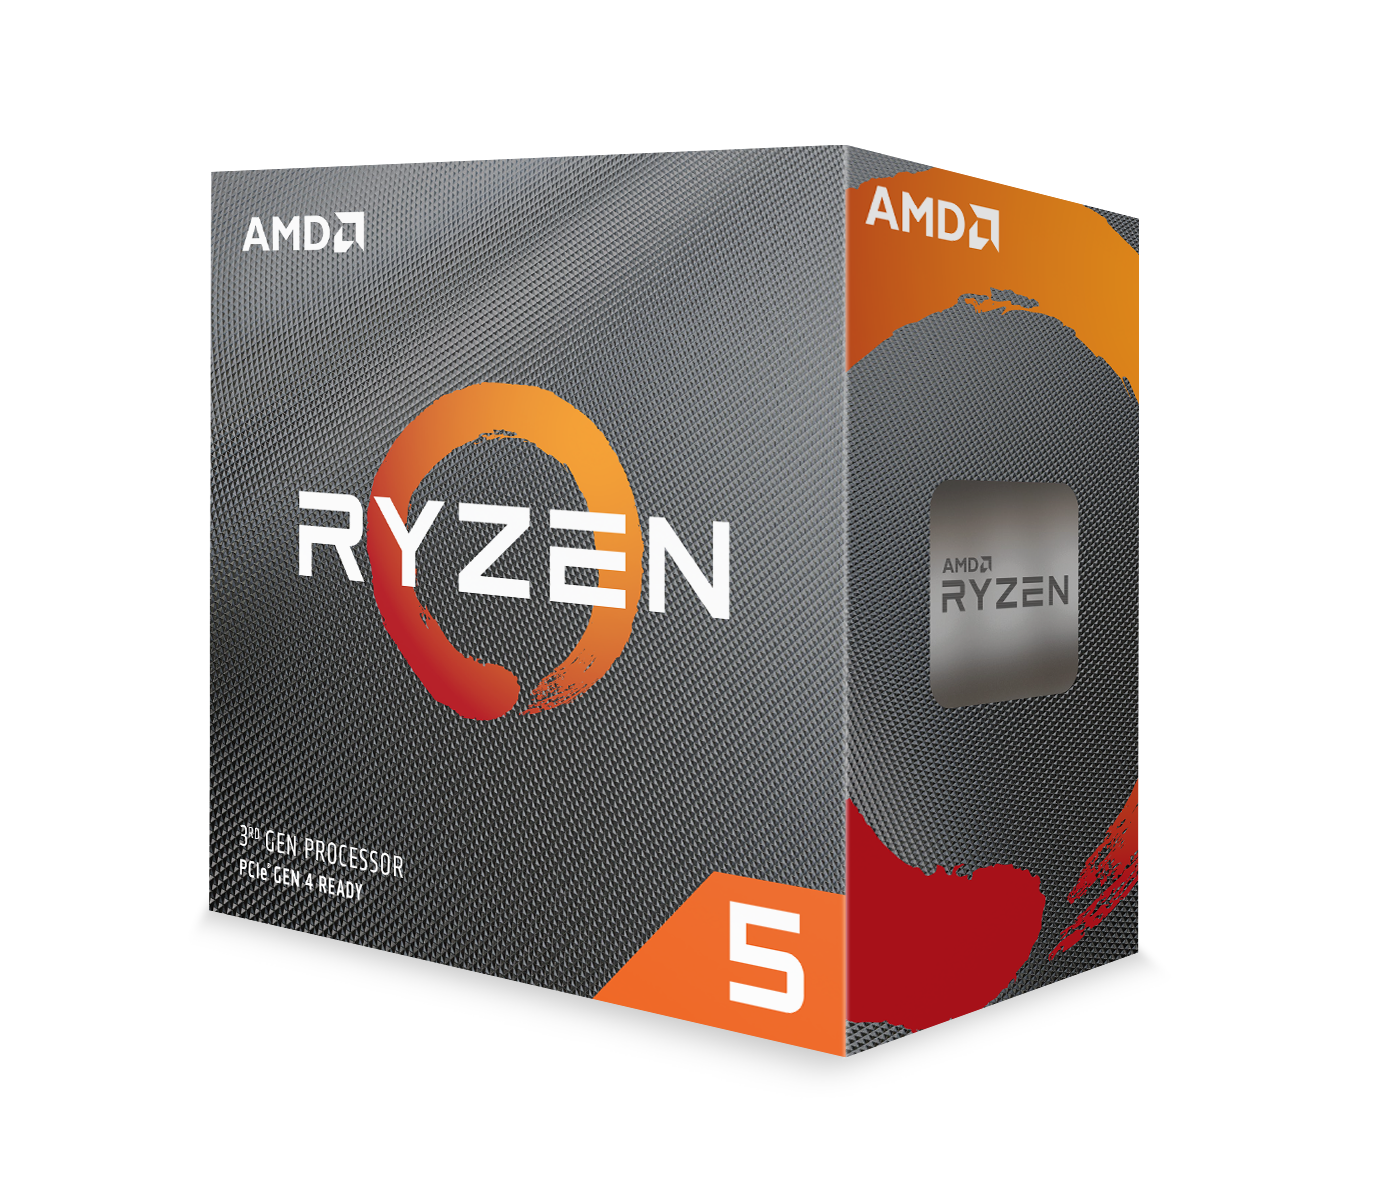 AMD Ryzen 5 3600X 6-Core, 12-Thread 4.4 GHz AM4 Processor - image 1 of 3